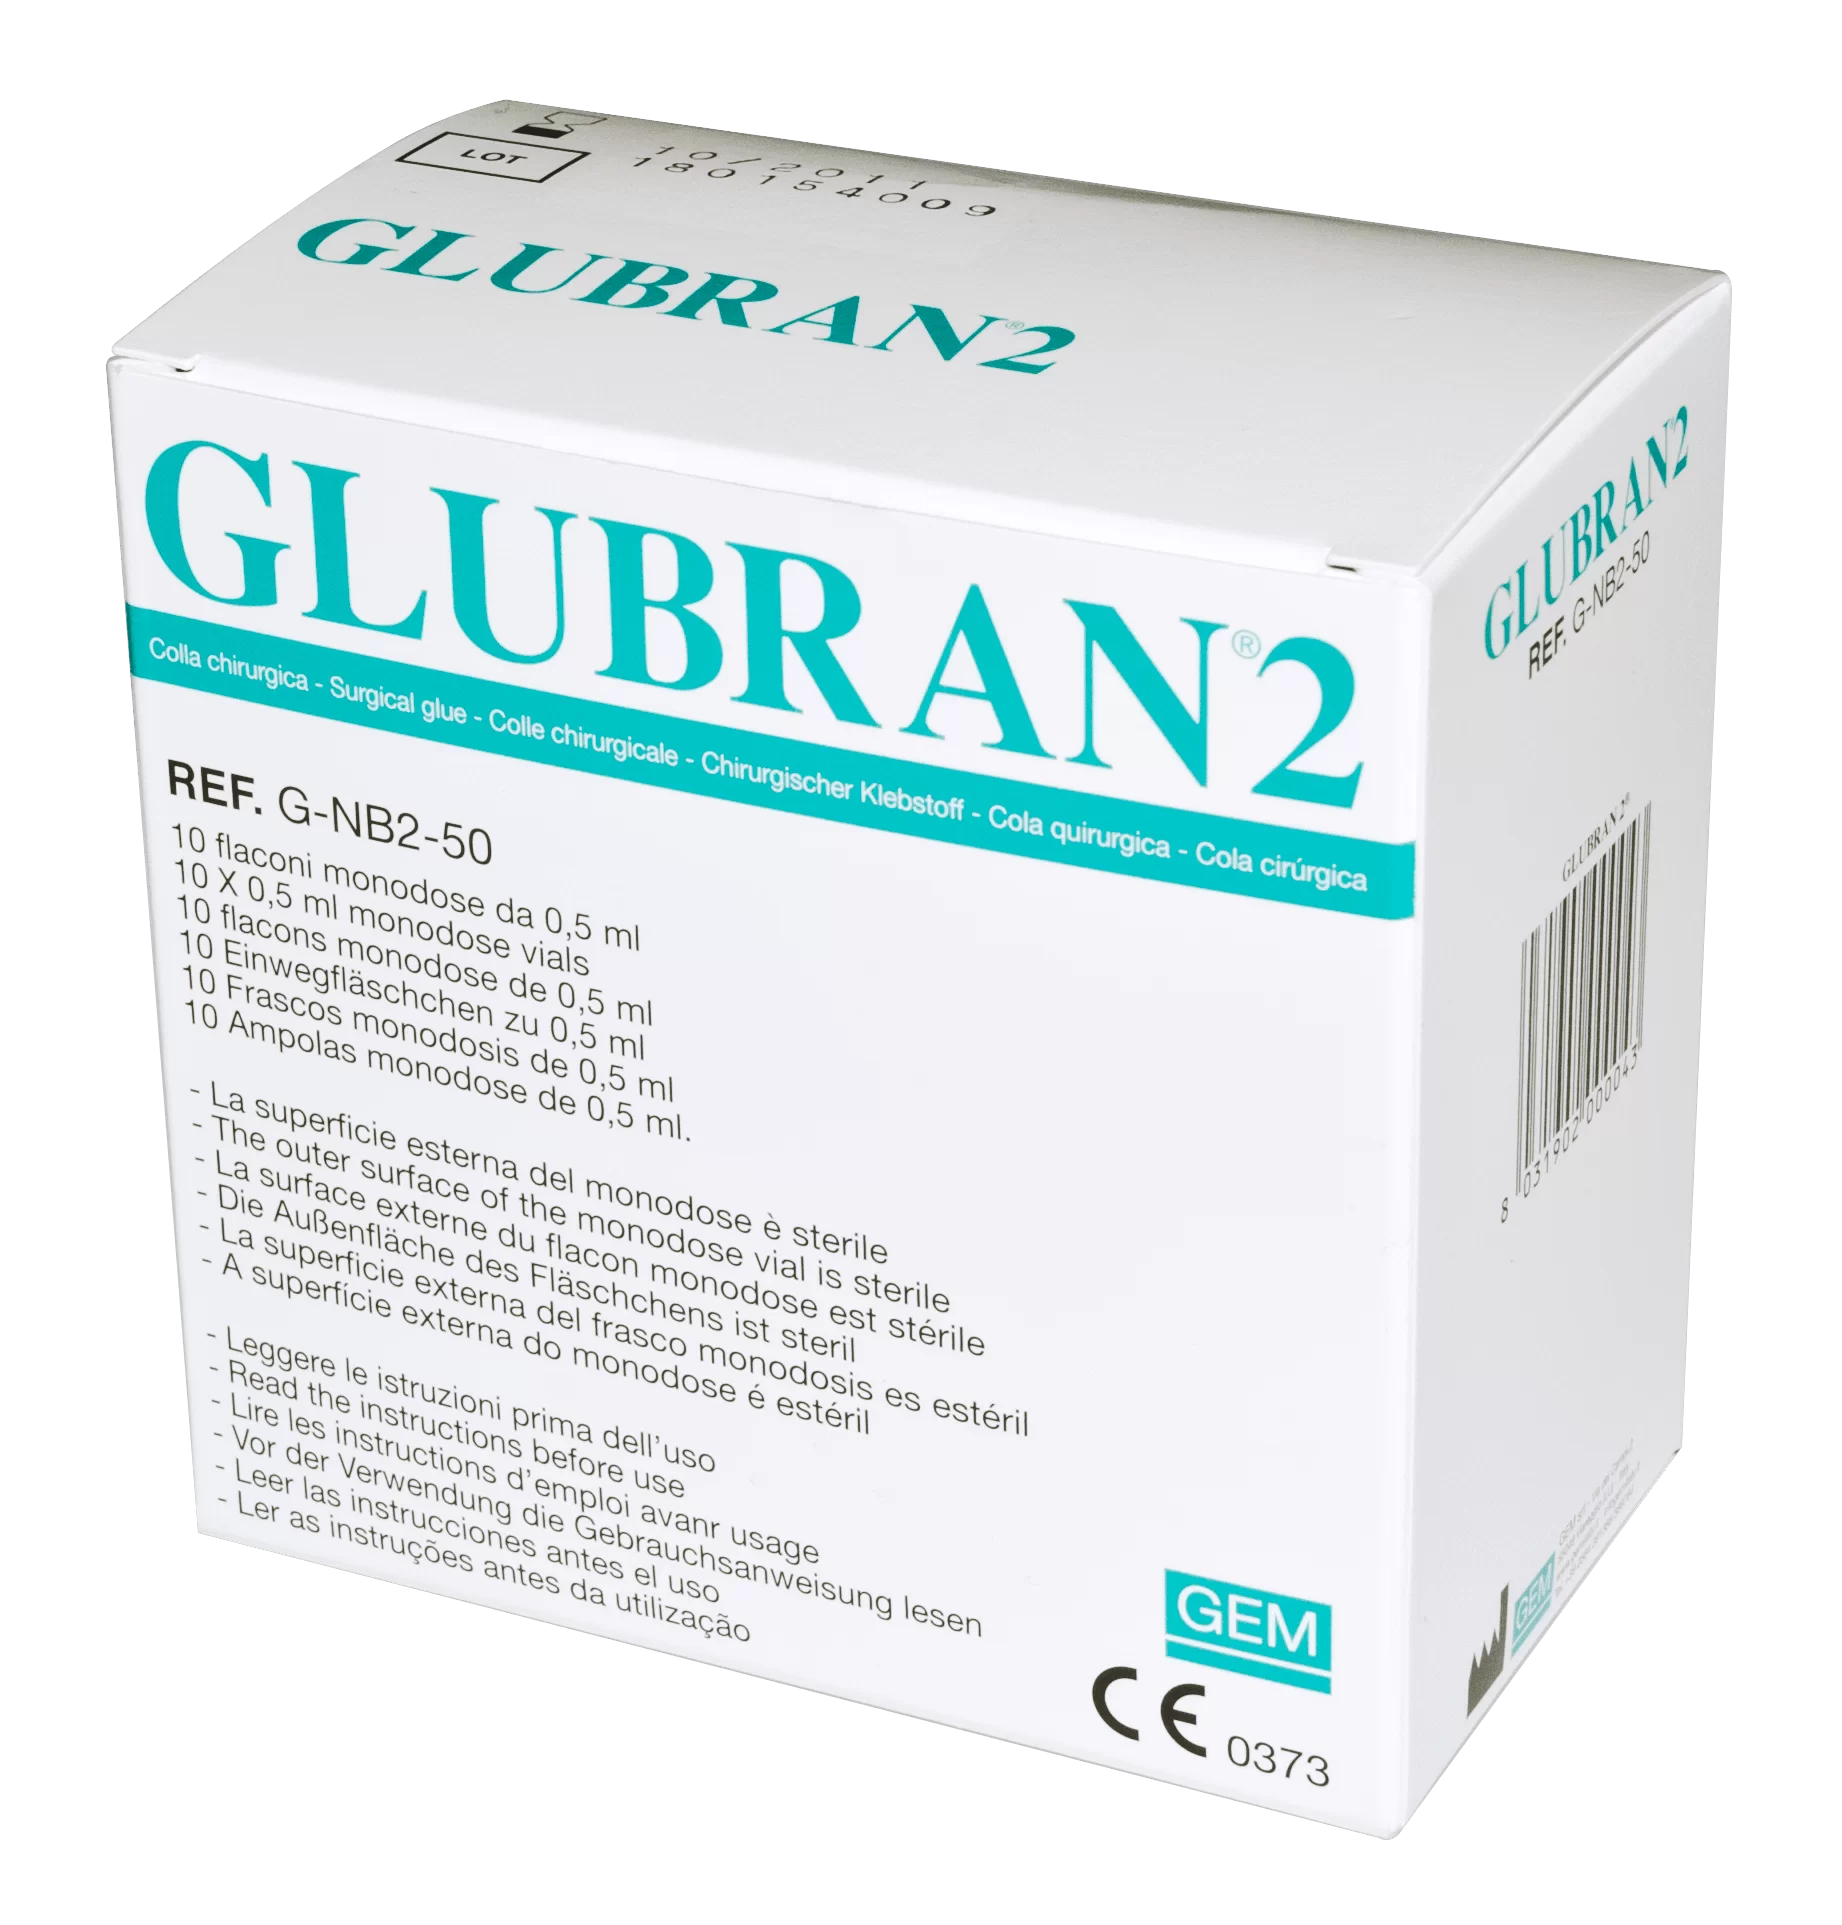 Producto Glubran 2